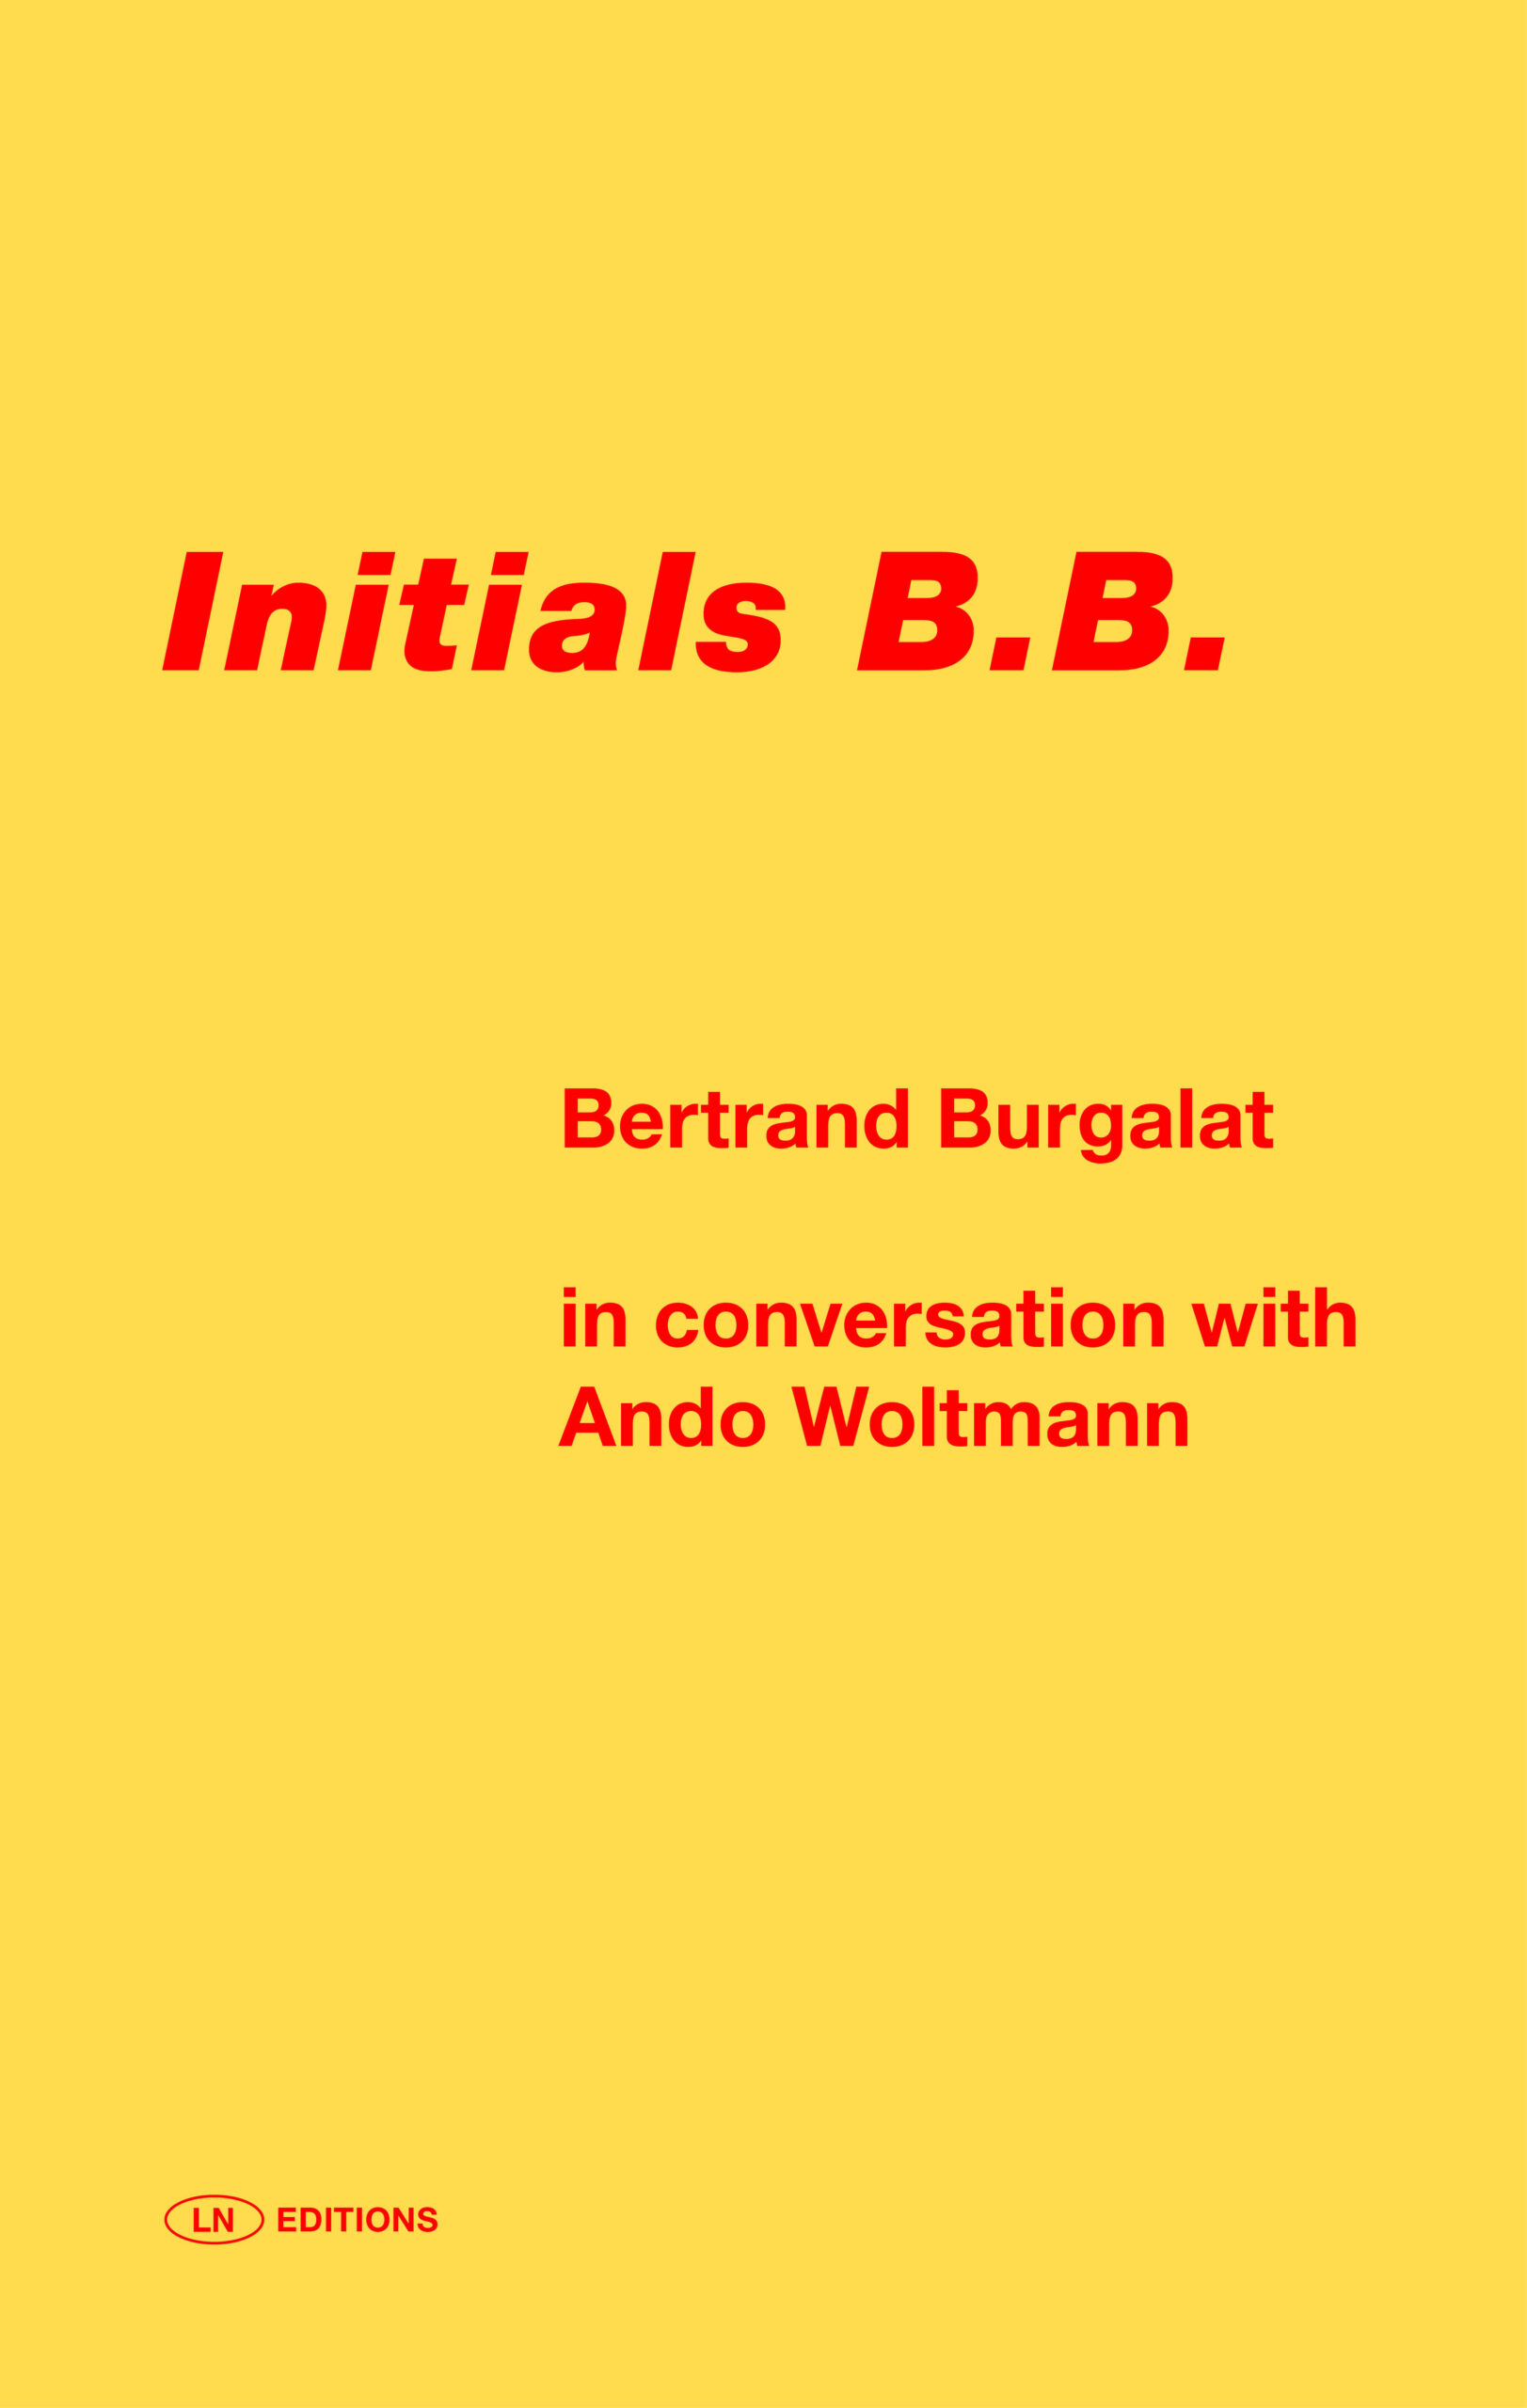 Initials B.B. Bertrand Burgalat in Conversation with Ando Woltmann